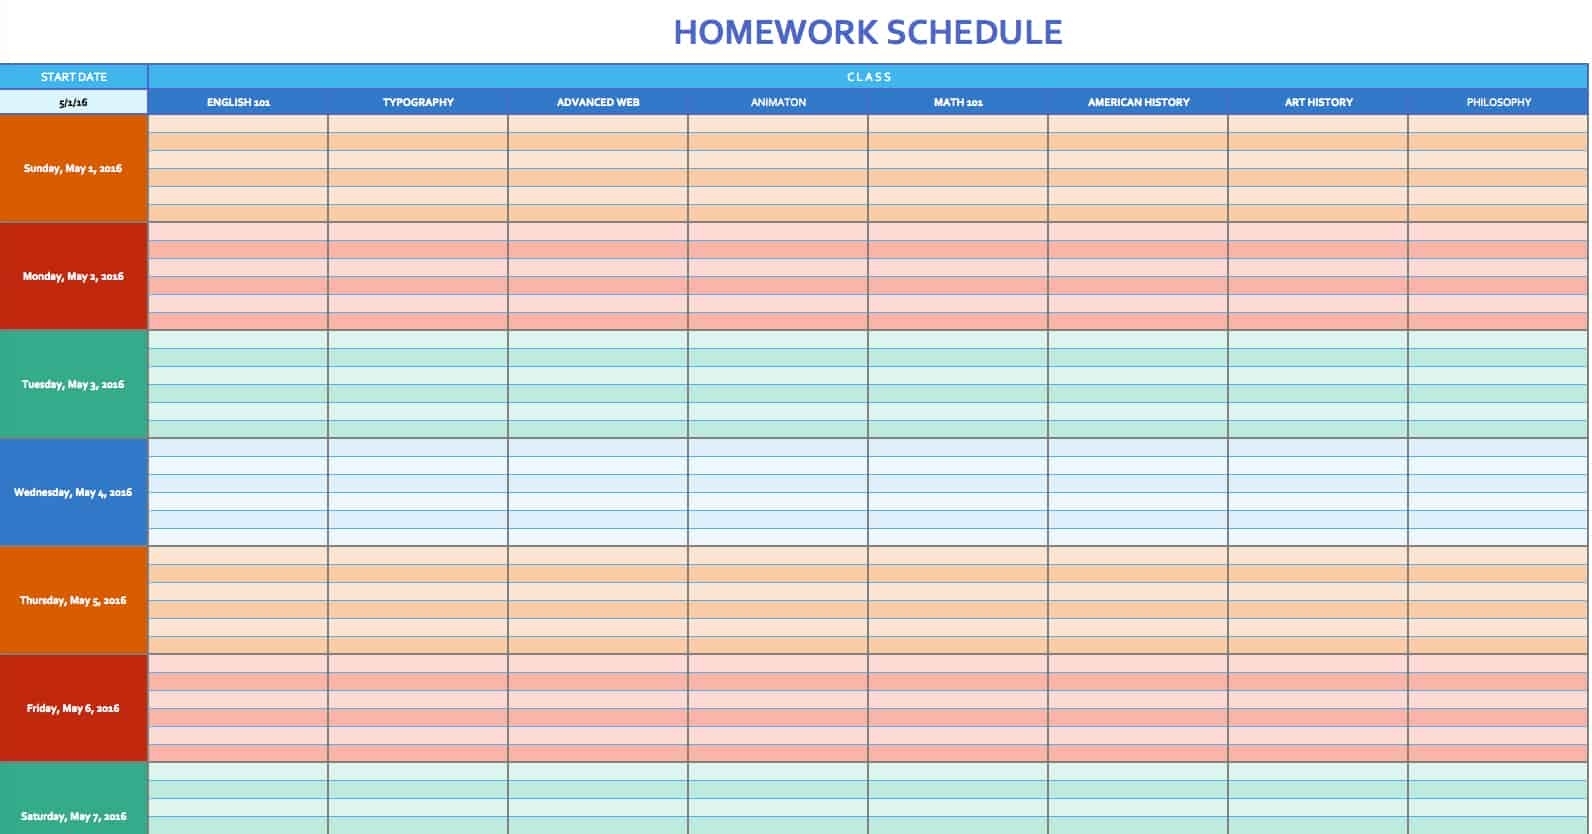 Free Weekly Schedule Templates For Excel - Smartsheet 7 Day Calendar Template Excel